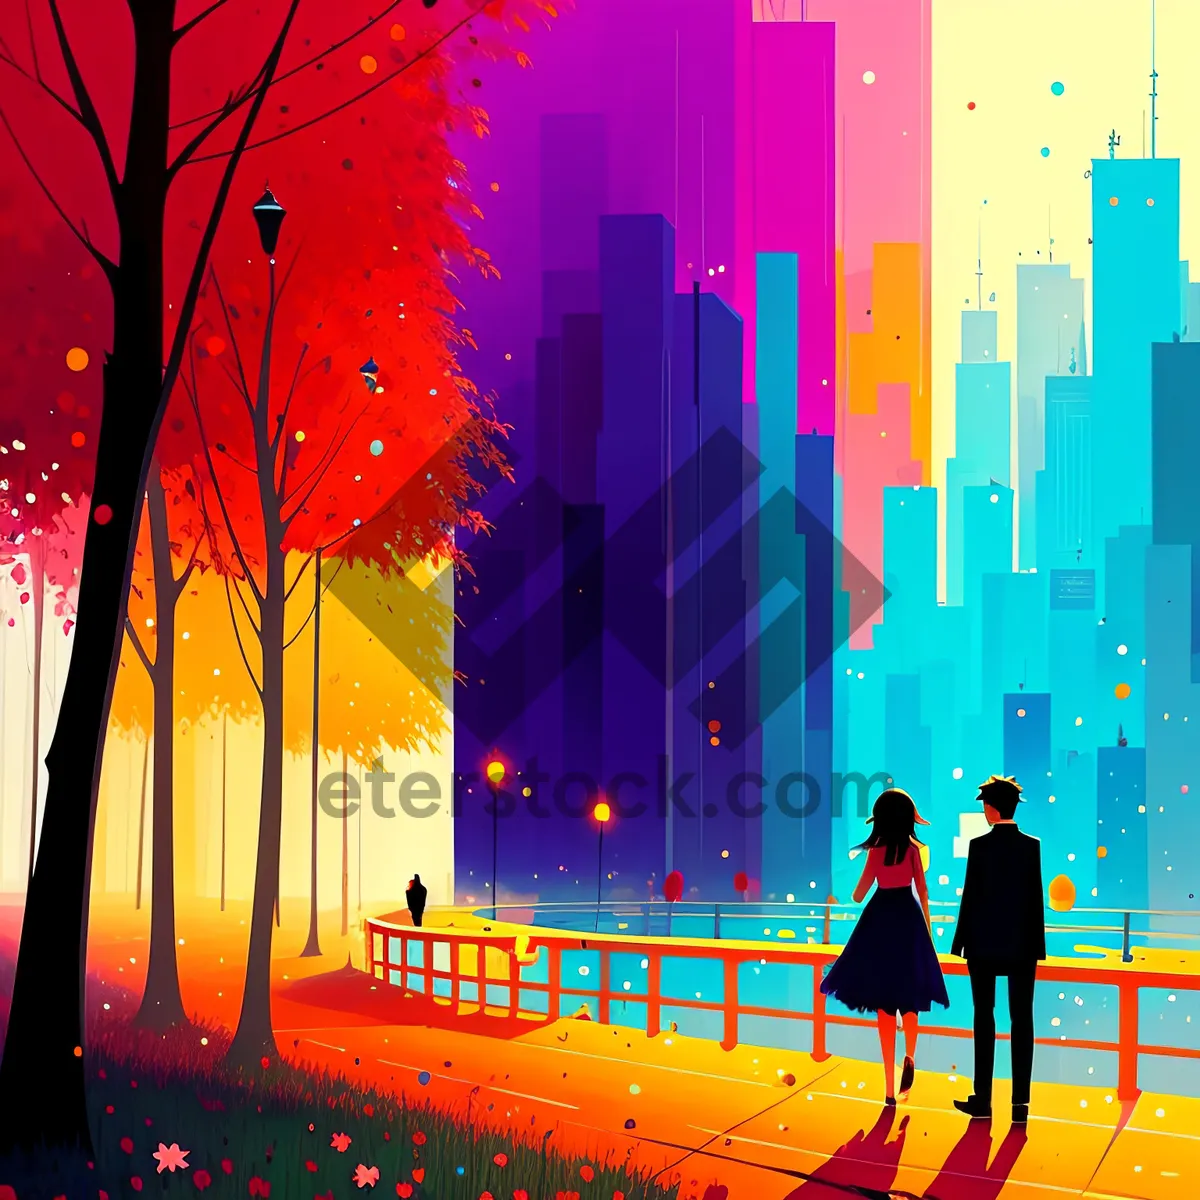 Picture of Vibrant Digital Art Wallpaper: Colorful Lighting Design